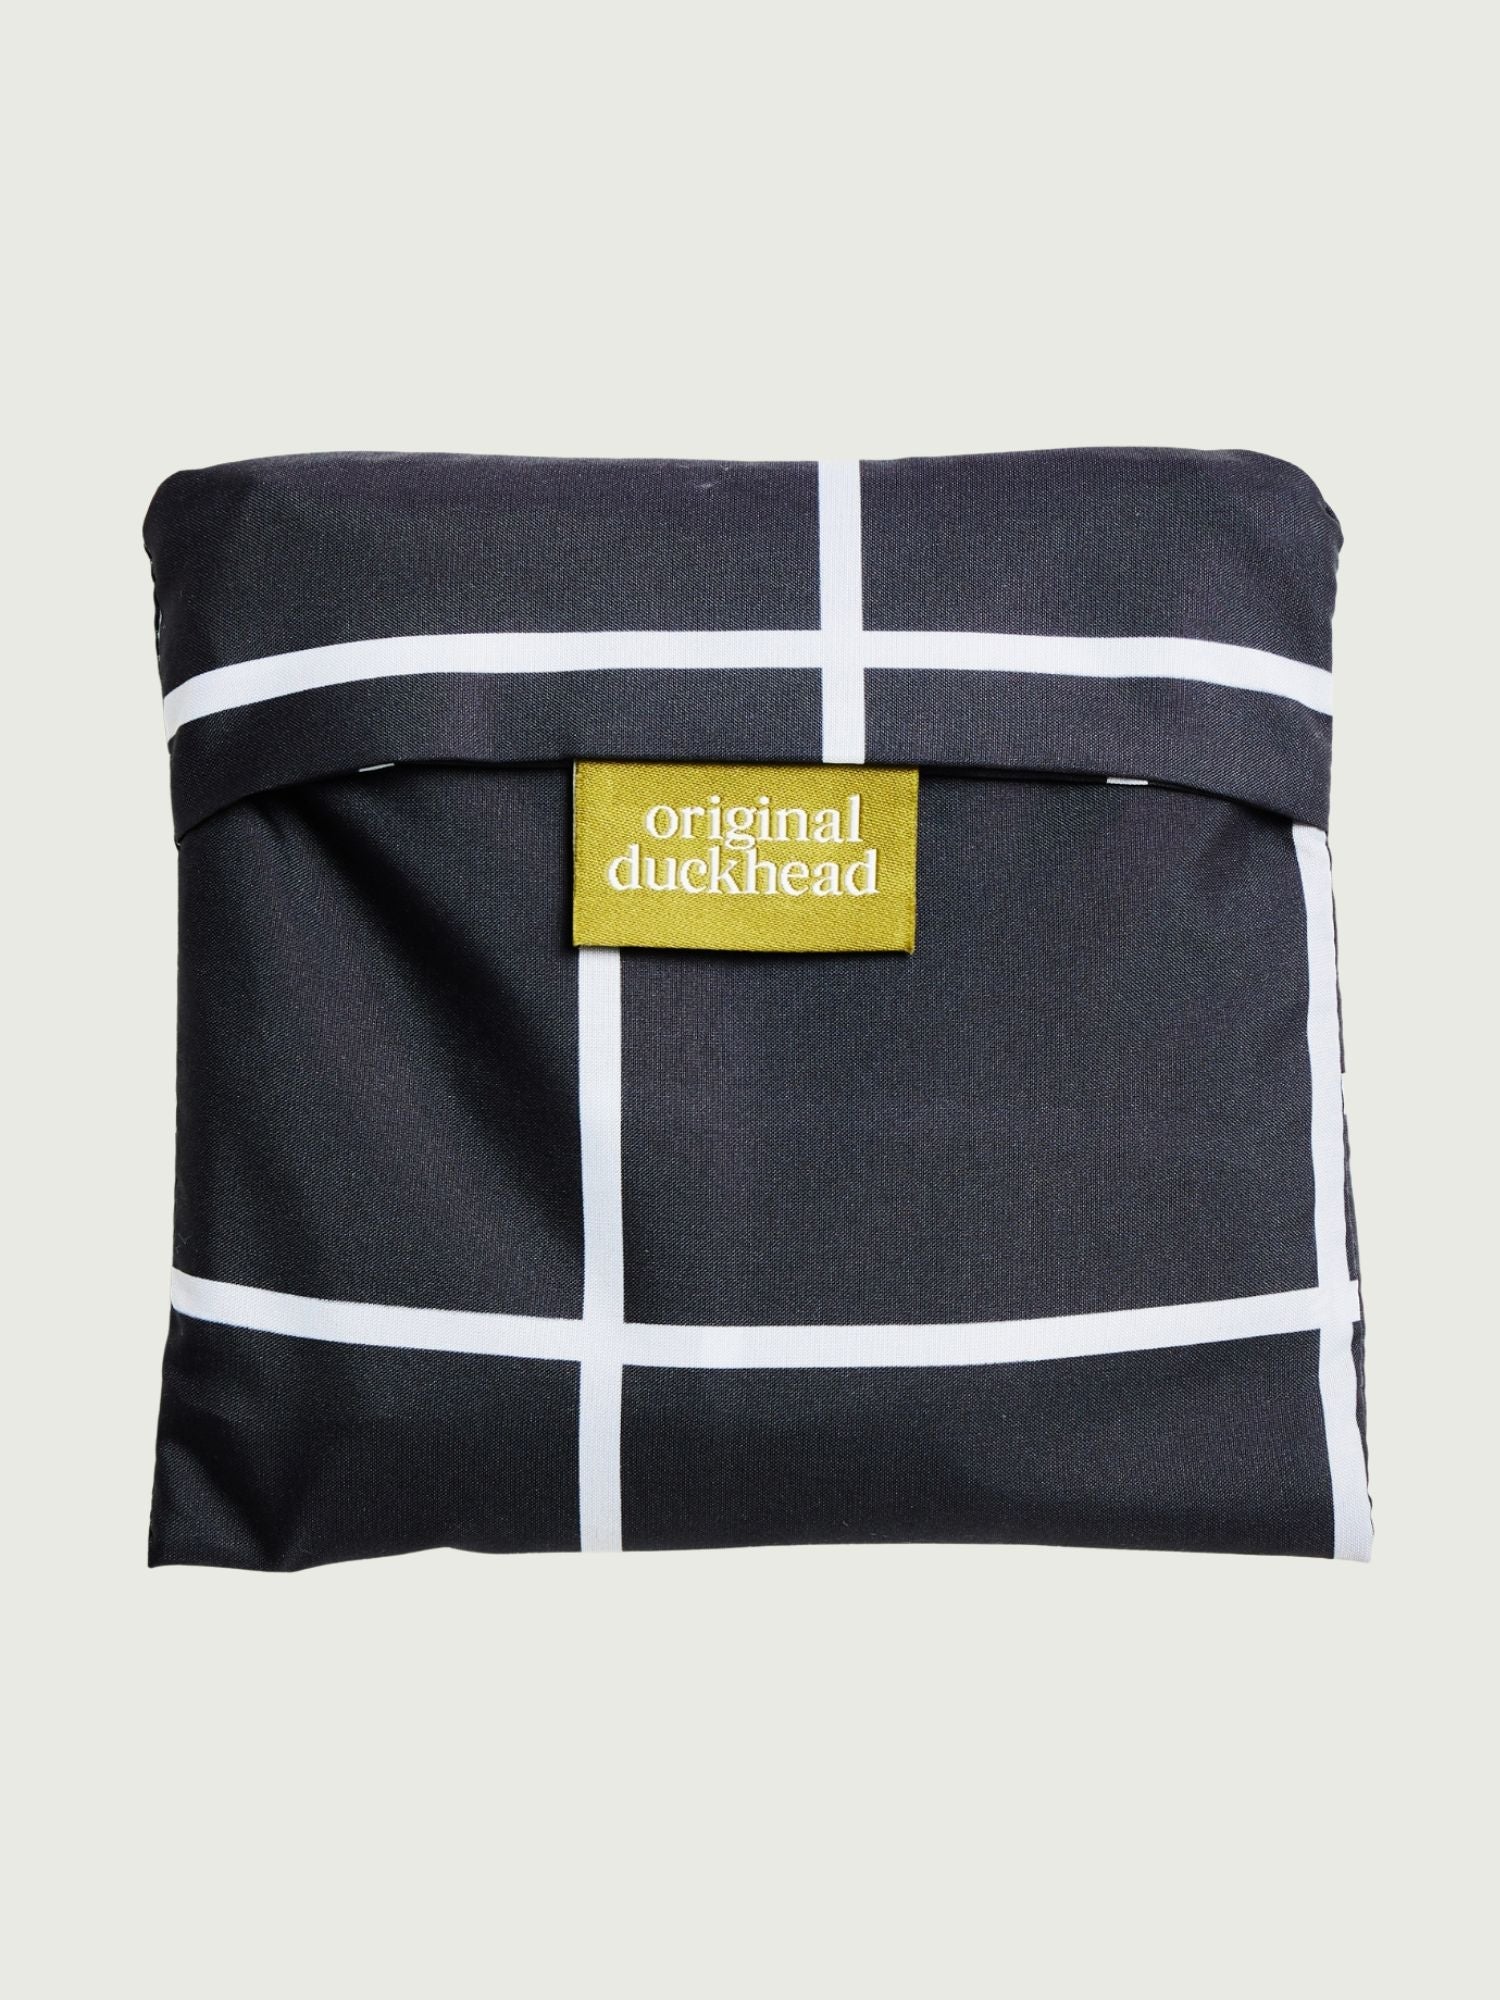 Black Grid Reusable Bag